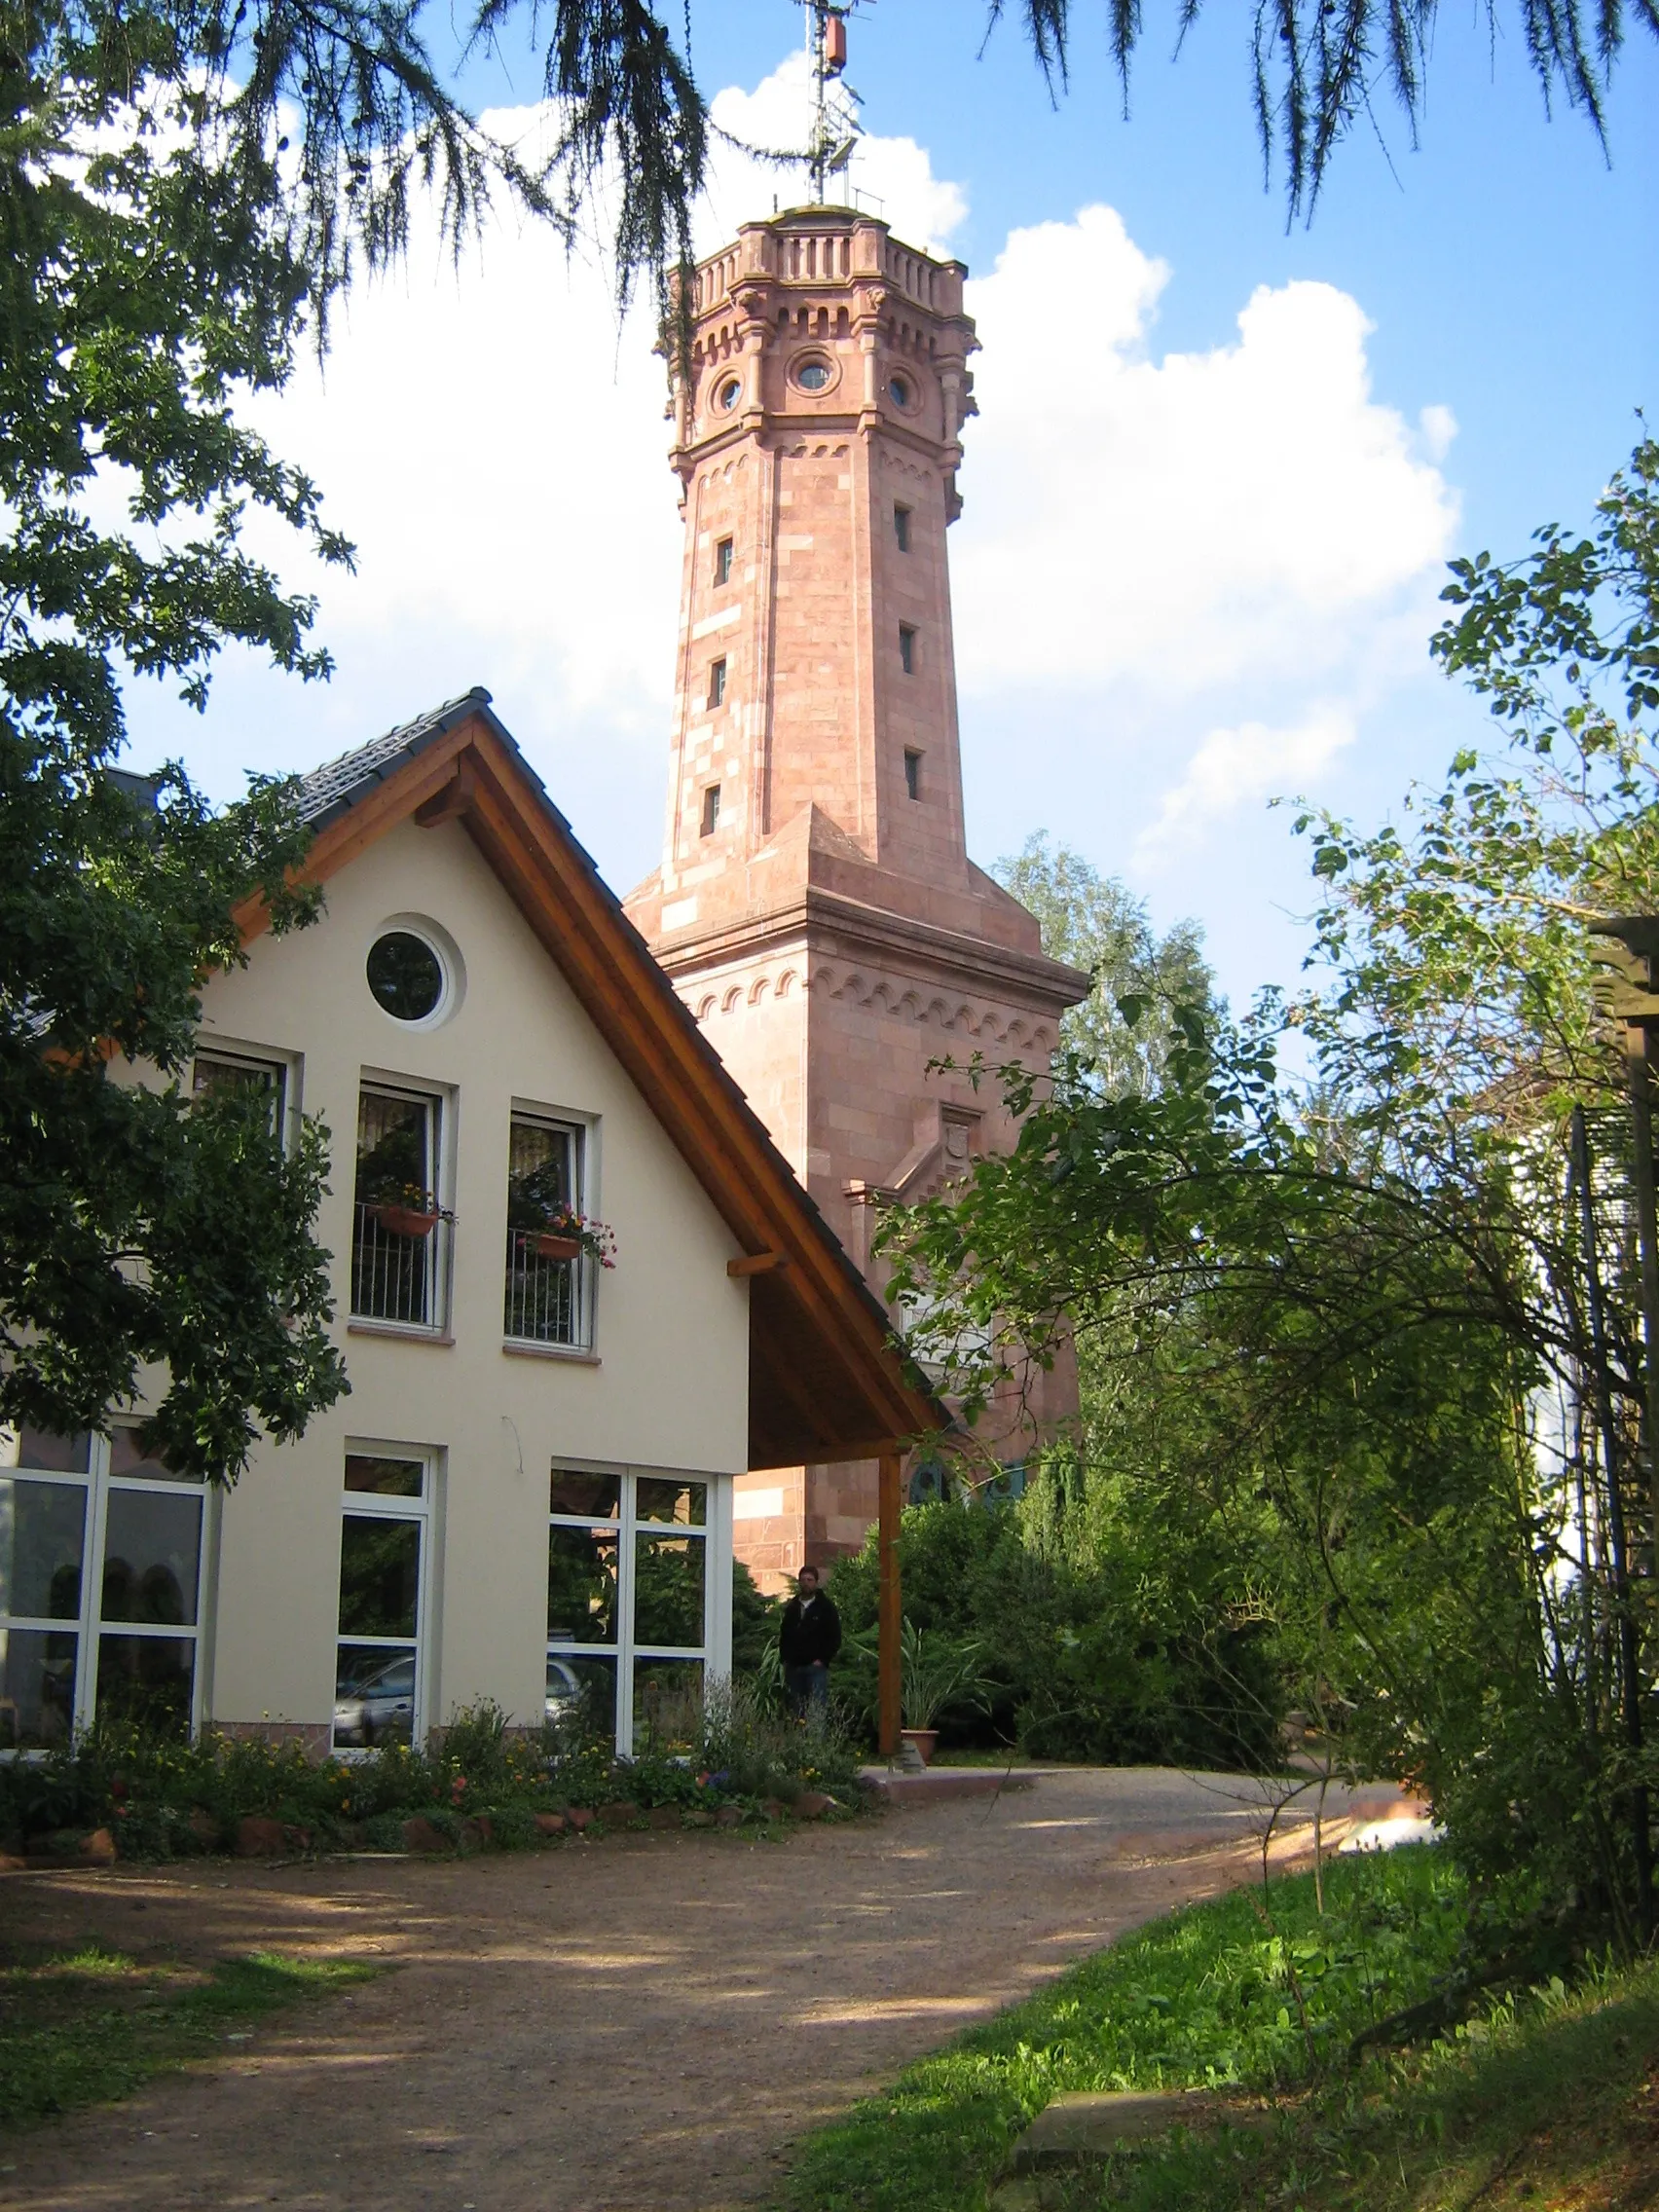 Photo showing: The Tower Friedrich August Turm and the Restaurant Türmerhaus on mountain of Rochlitz, Der Friedrich-August-Turm und das Türmerhaus am de:Rochlitzer Berg